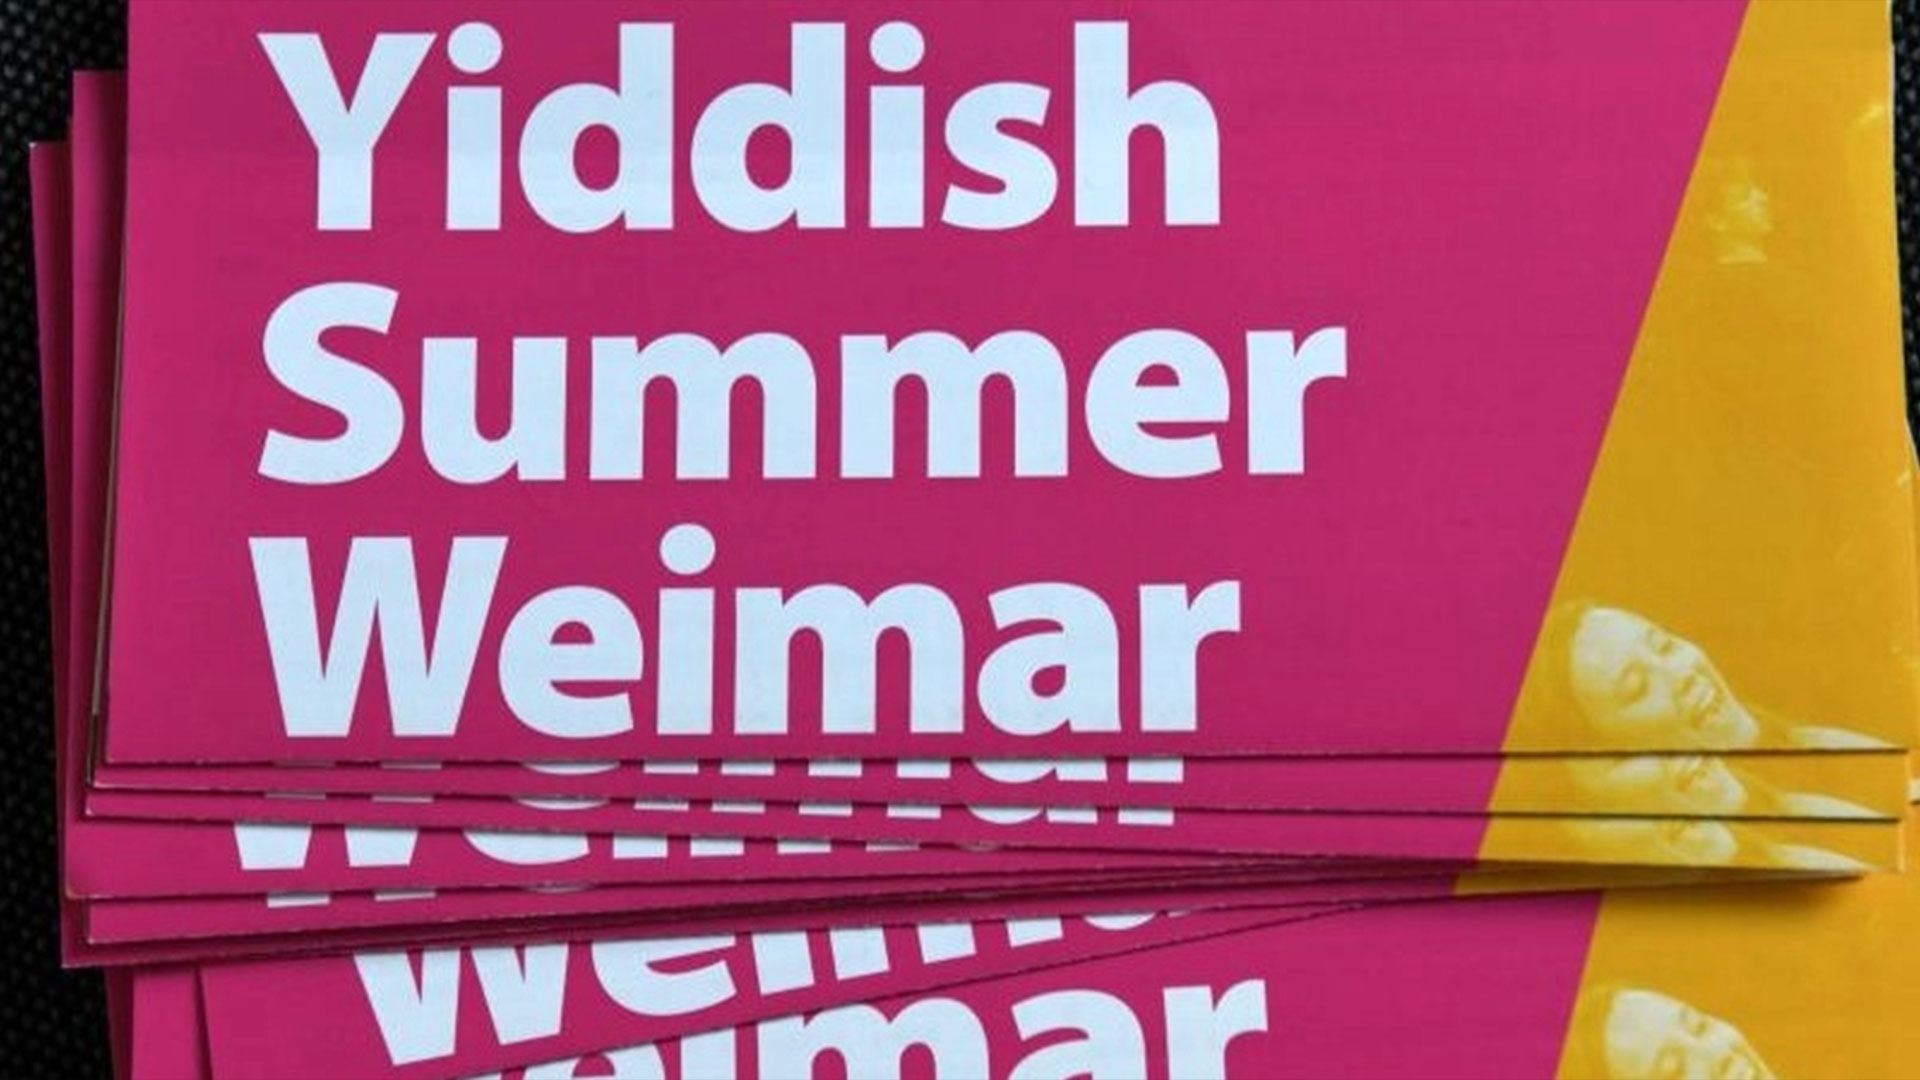 Yiddish Summer Weimar